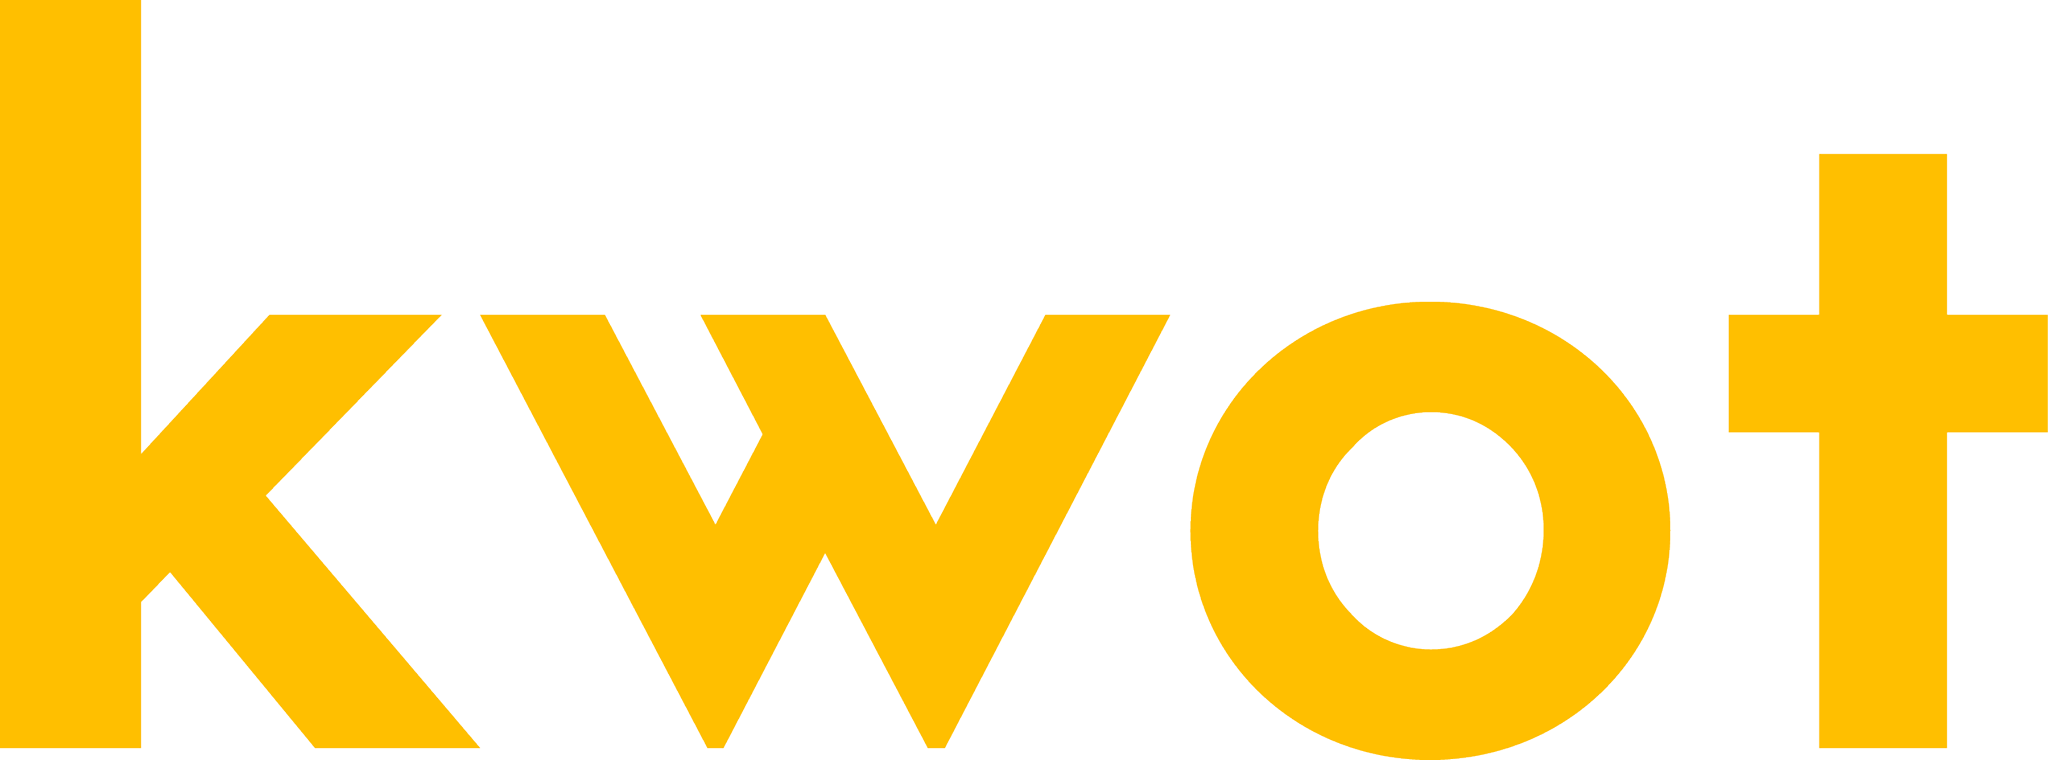 Kwot Logo